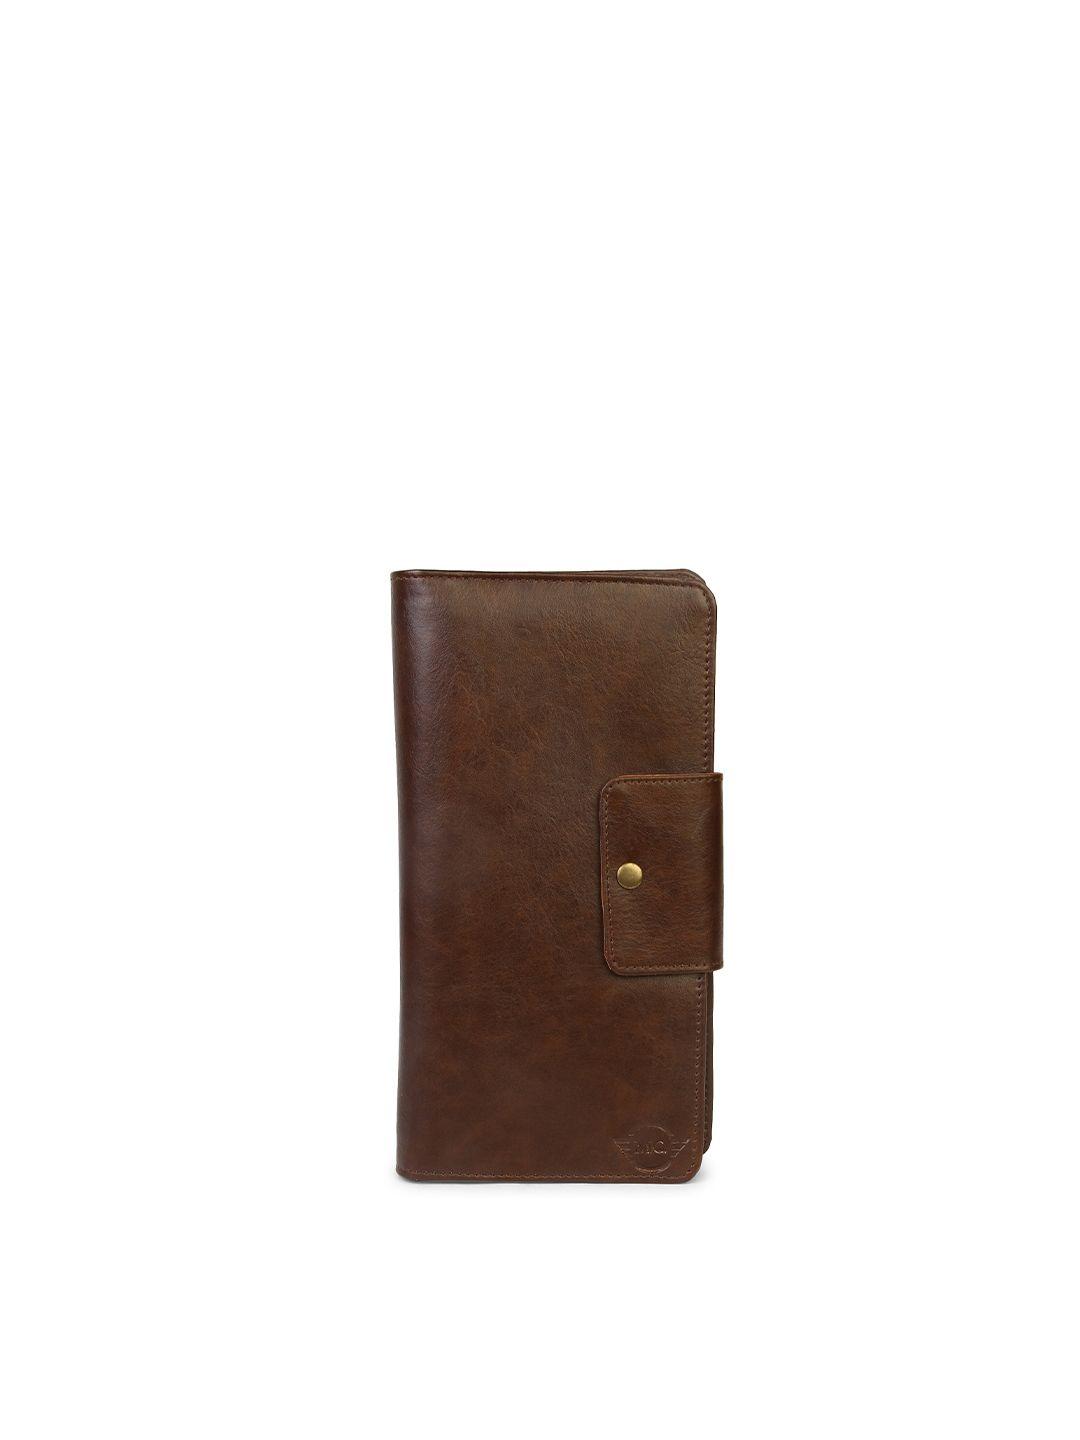 mutaqinoti unisex brown solid leather passport holder